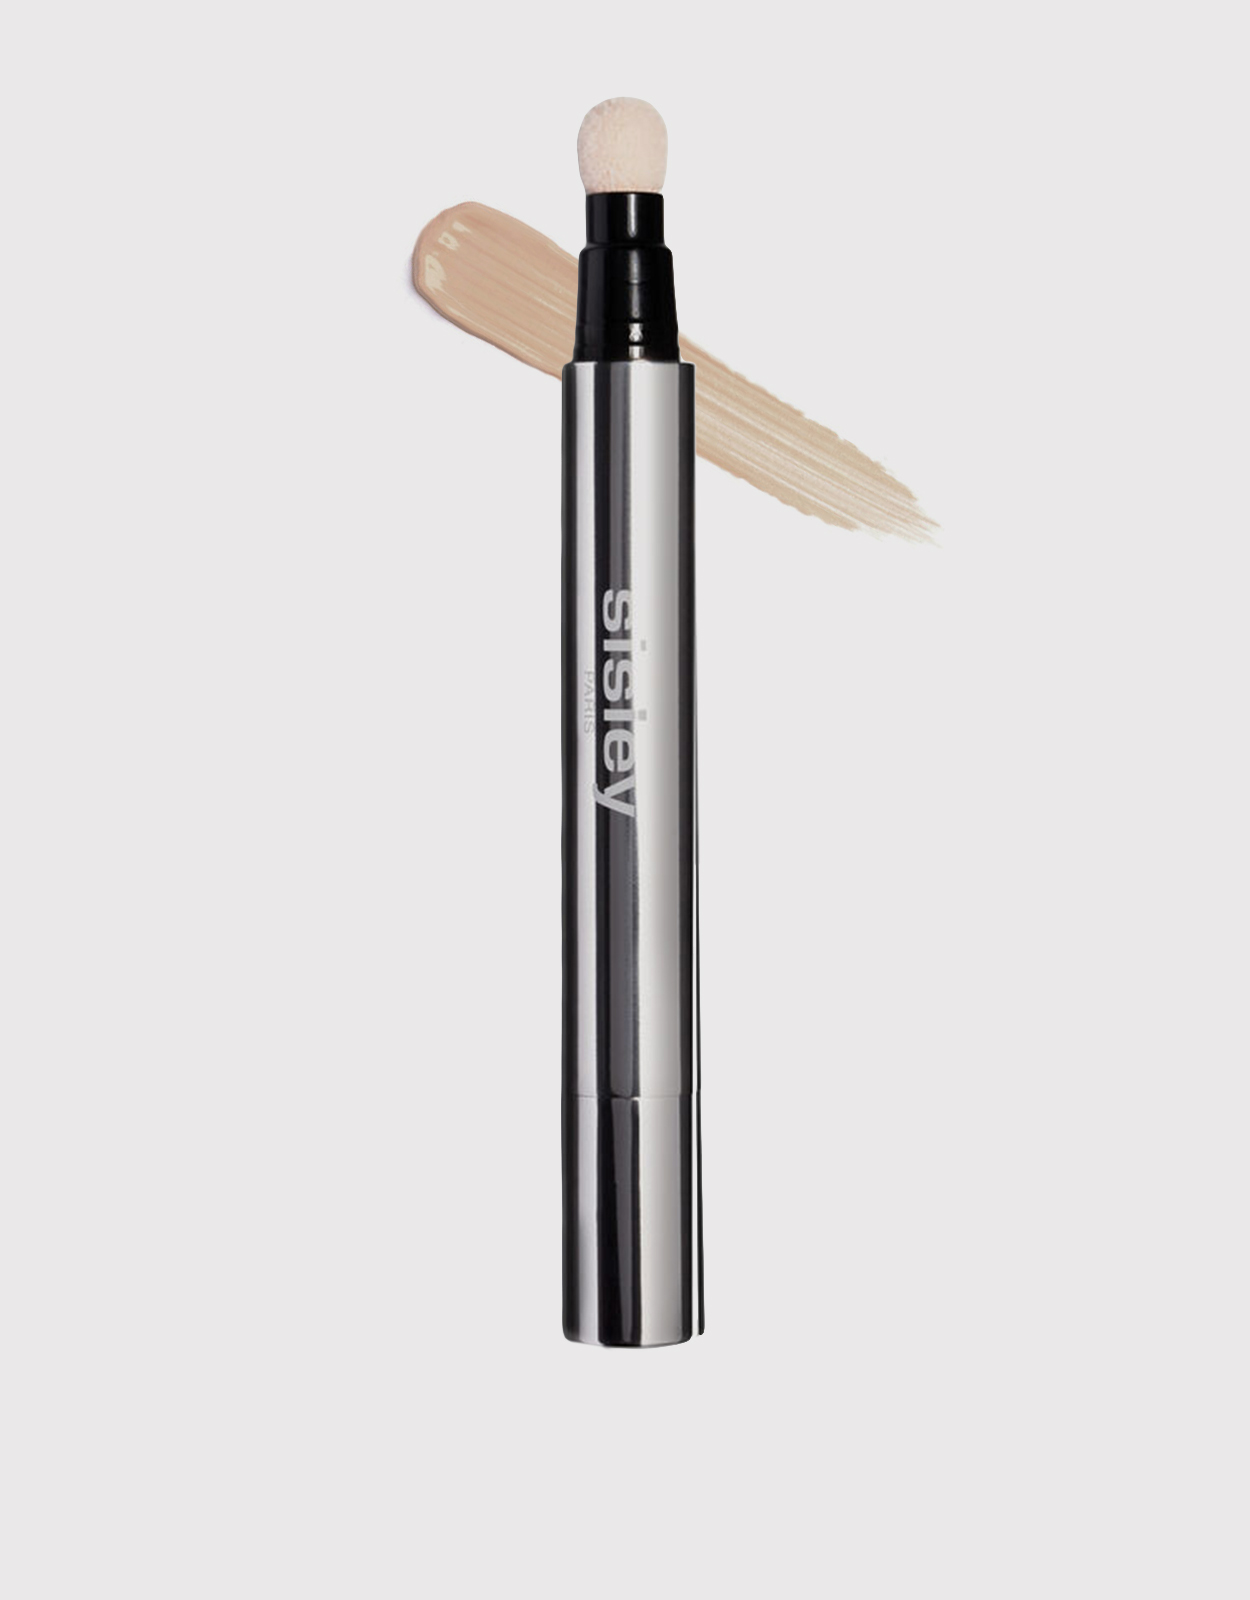 Sisley Stylo Lumiere Cushion Highlighter Pen-5 Warm Almond  (Makeup,Face,Highlighter)